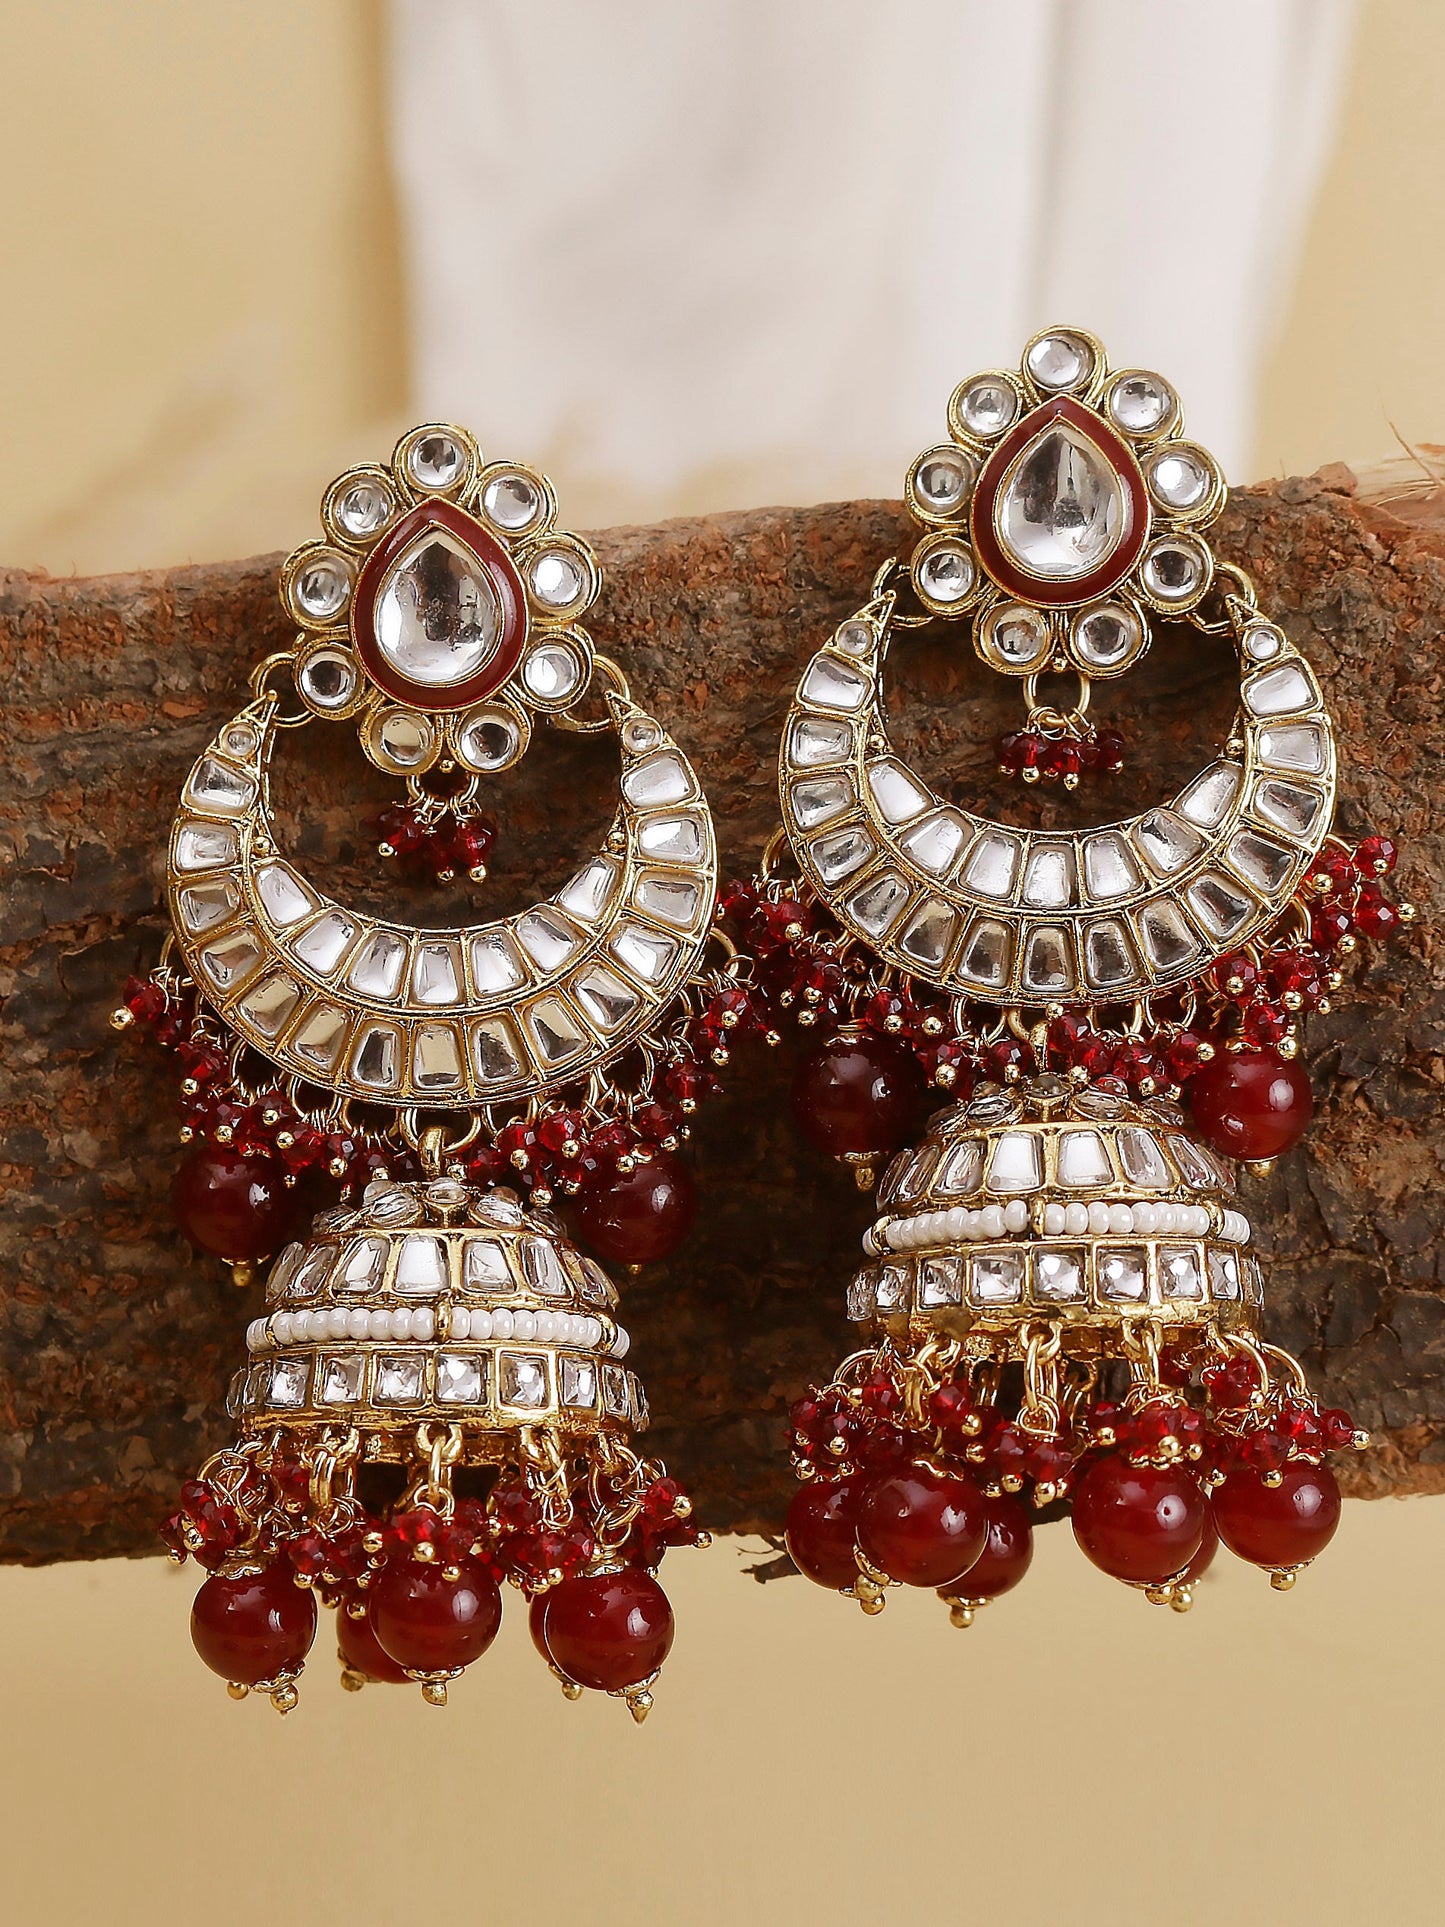 Swisni Alloy Golden Jhumki Earrings with Maroon Beads For Women|For Girls|Gifting|Anniversary|Birthday|Girlfriend